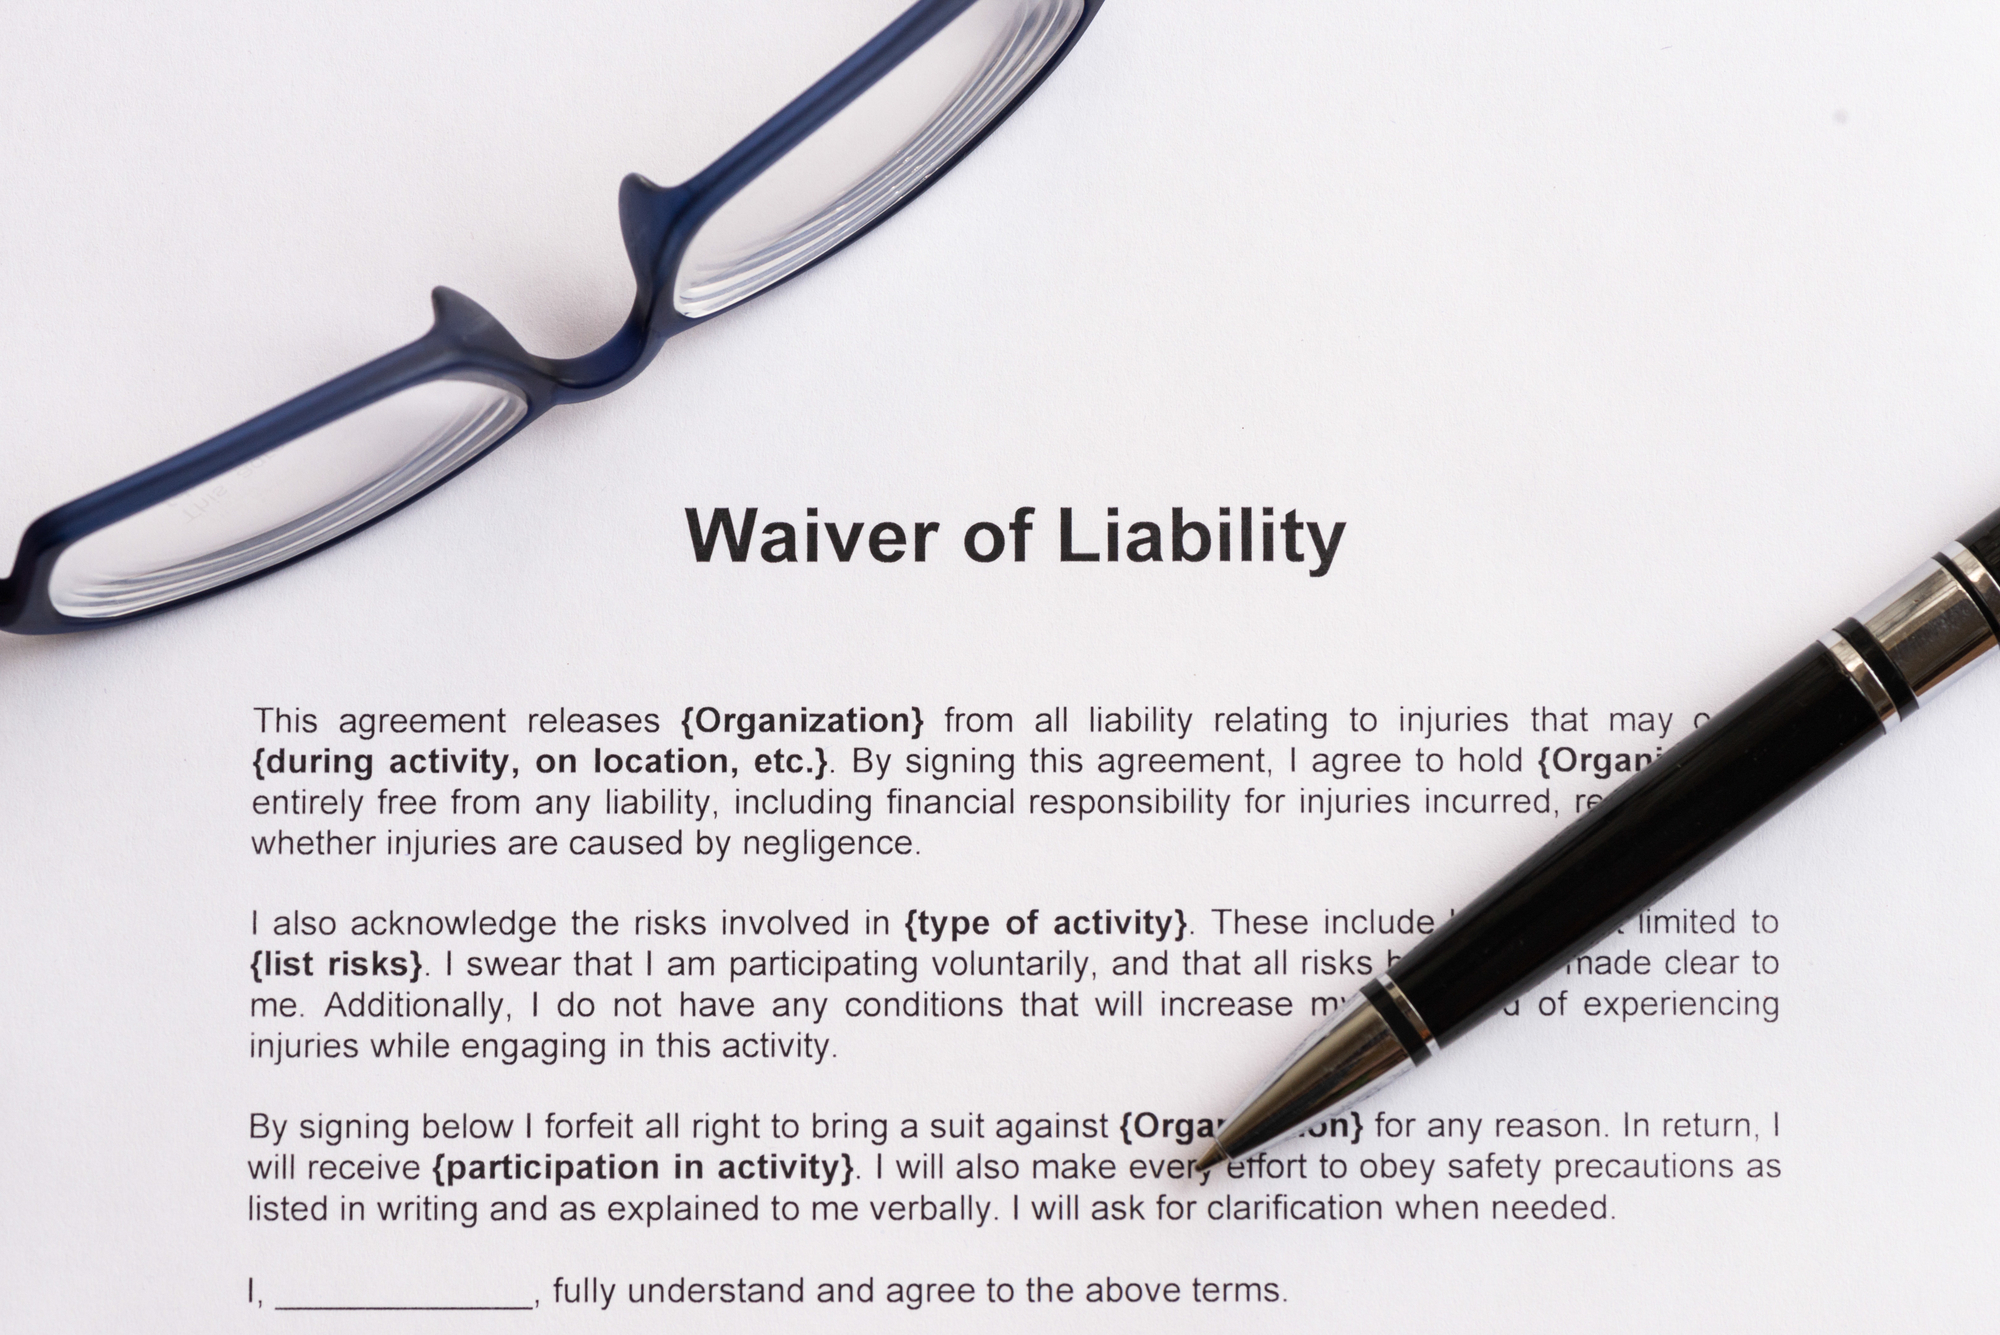 liability waiver